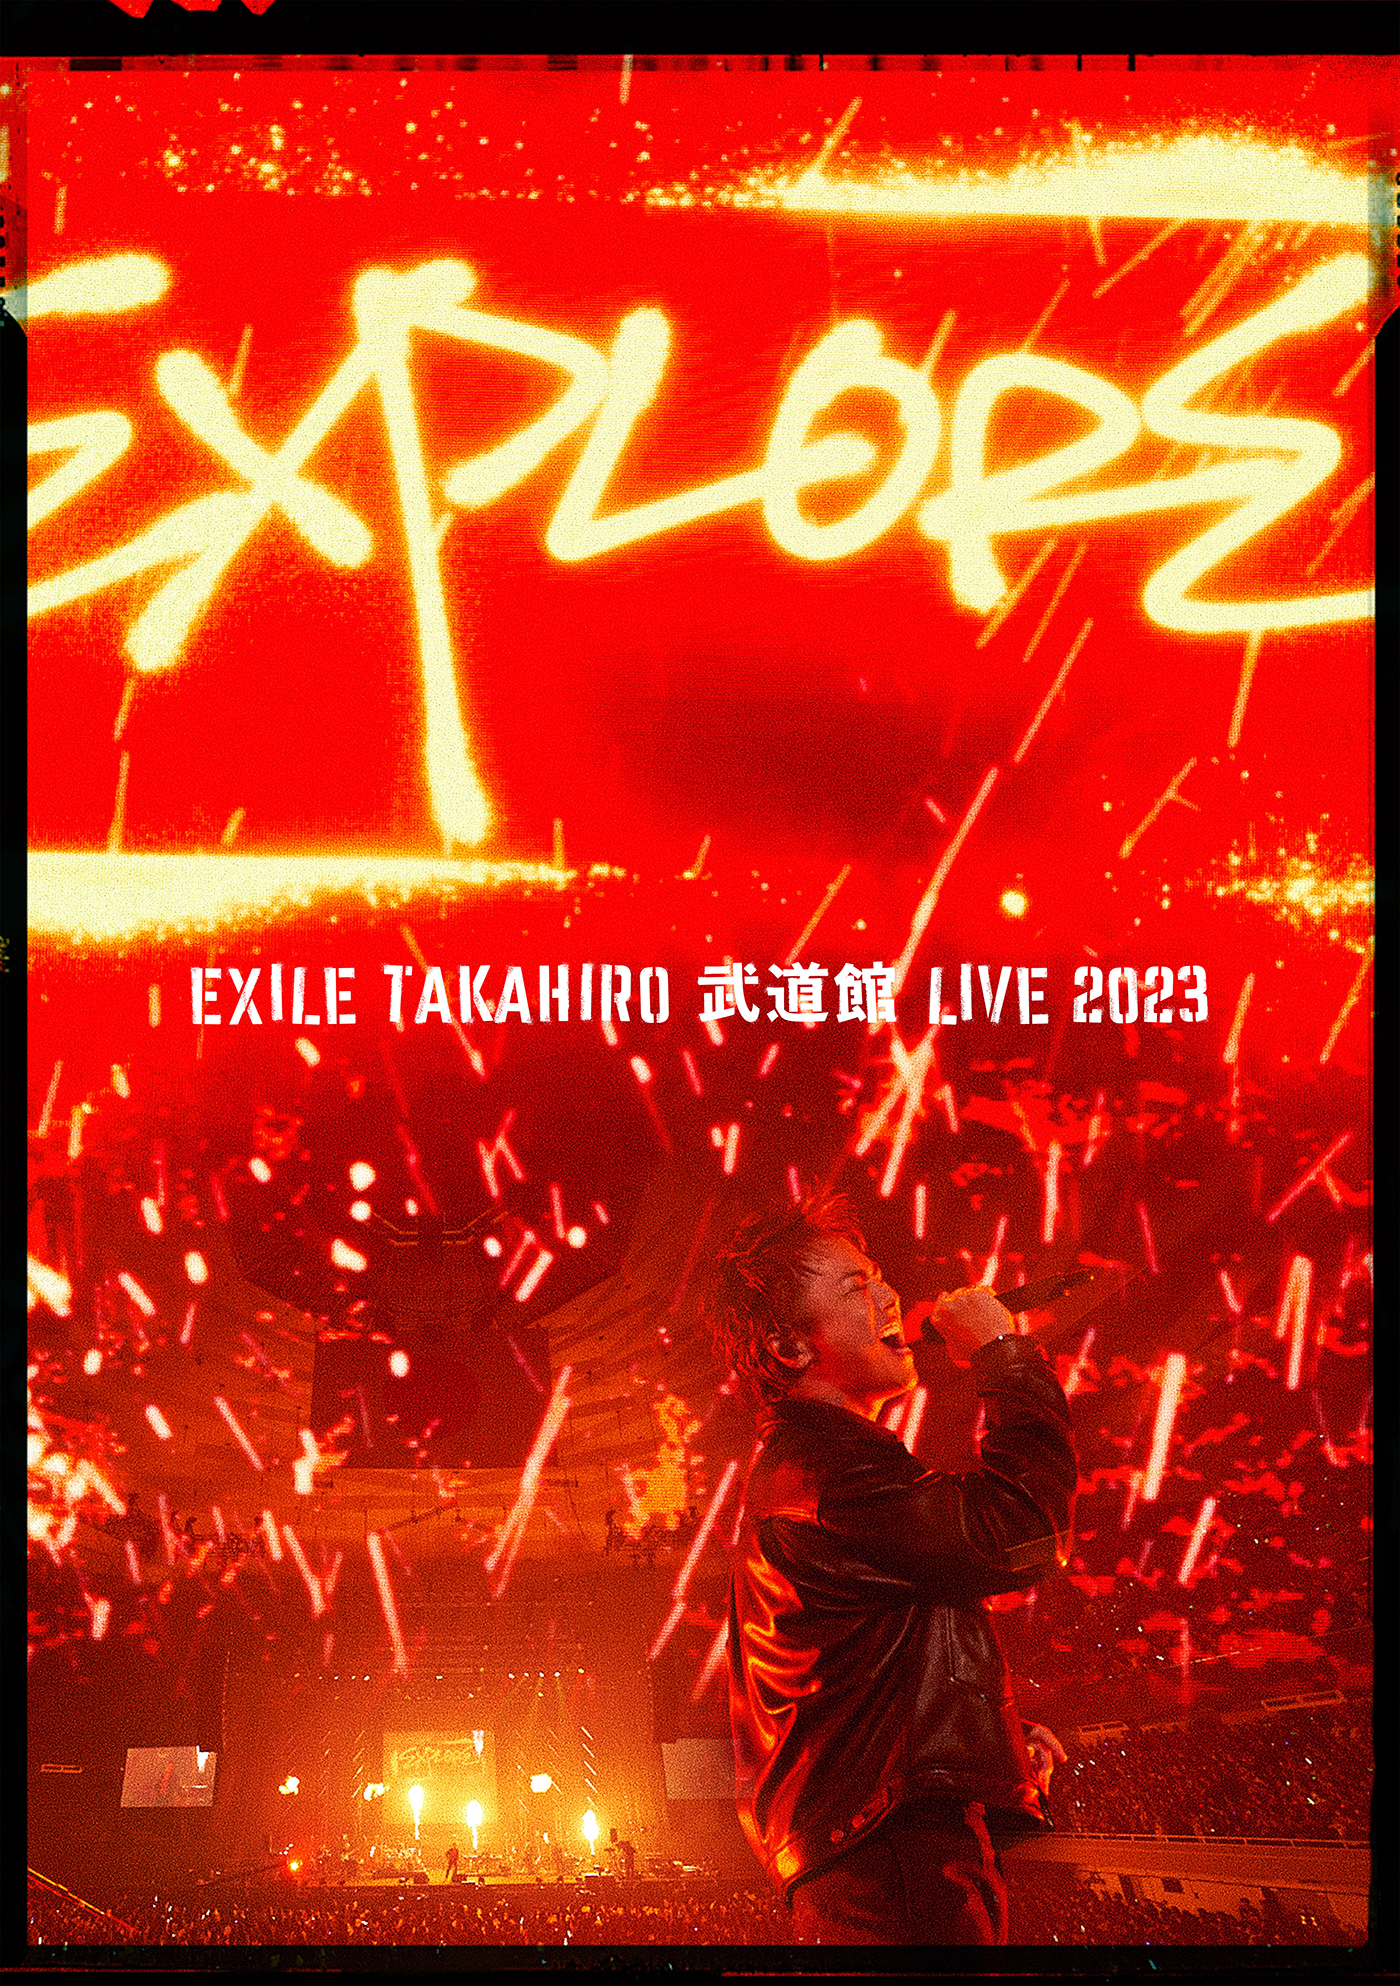 EXILE TAKAHIRO初の単独日本武道館公演からオープニングを飾った「EXPLORE」のライブ映像公開 - 画像一覧（1/1）